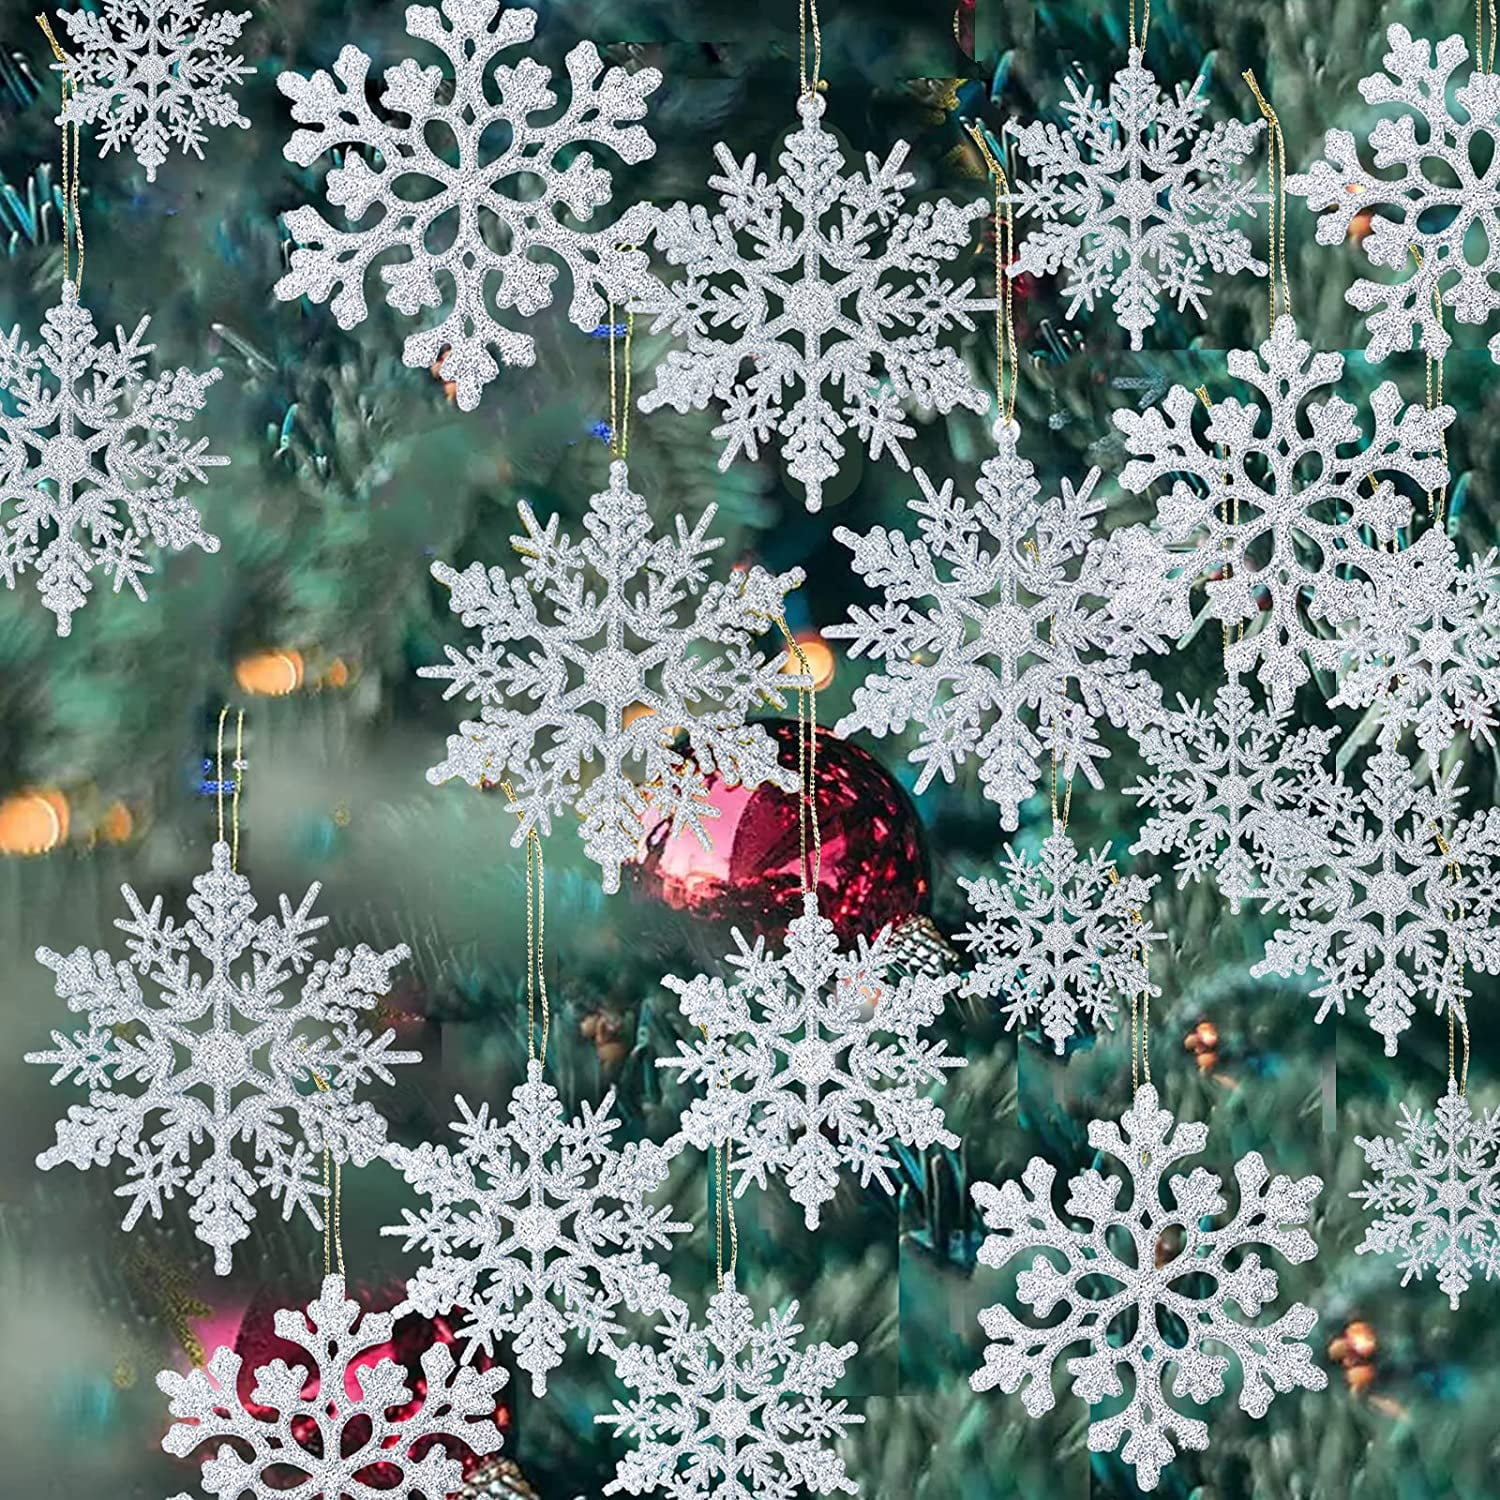 Gold Snowflake Glitter Christmas Decoration | Plastic